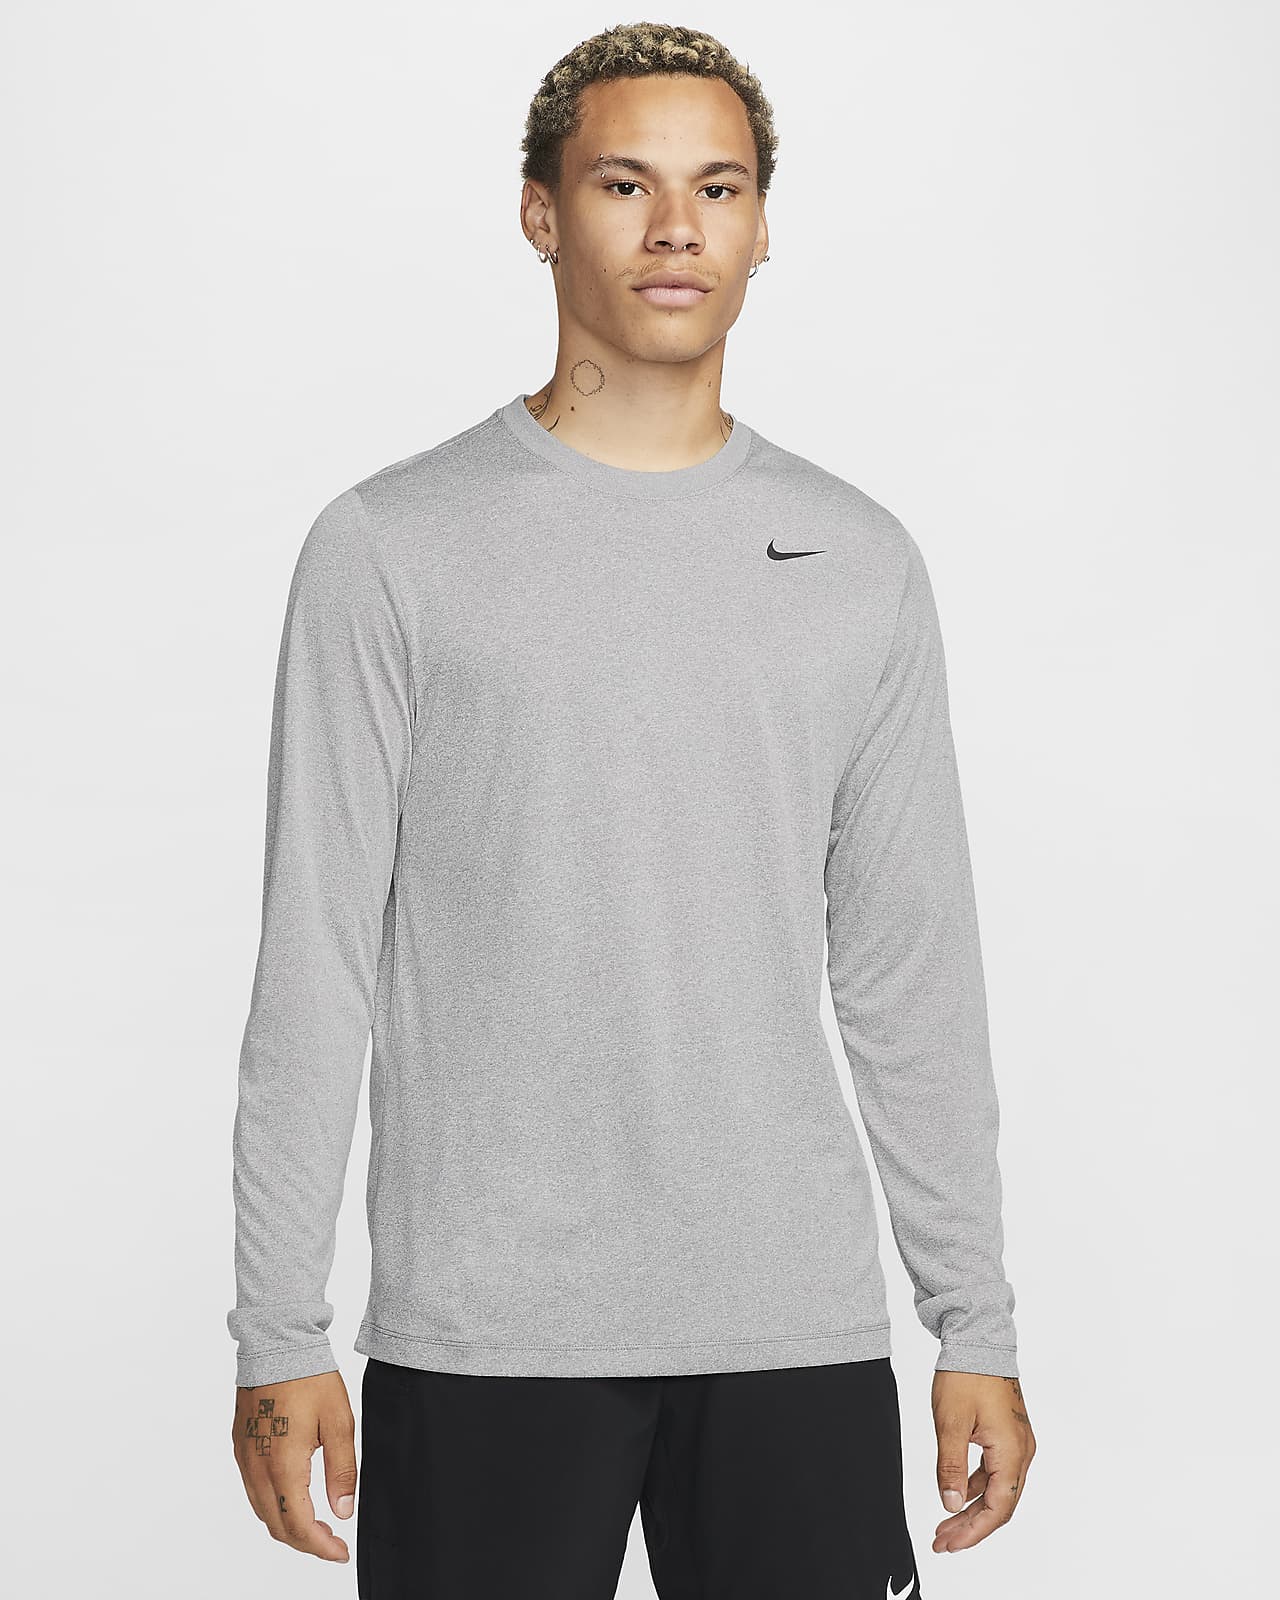 Nike Dri-FIT Legend Men's Long-Sleeve Top. Nike.com